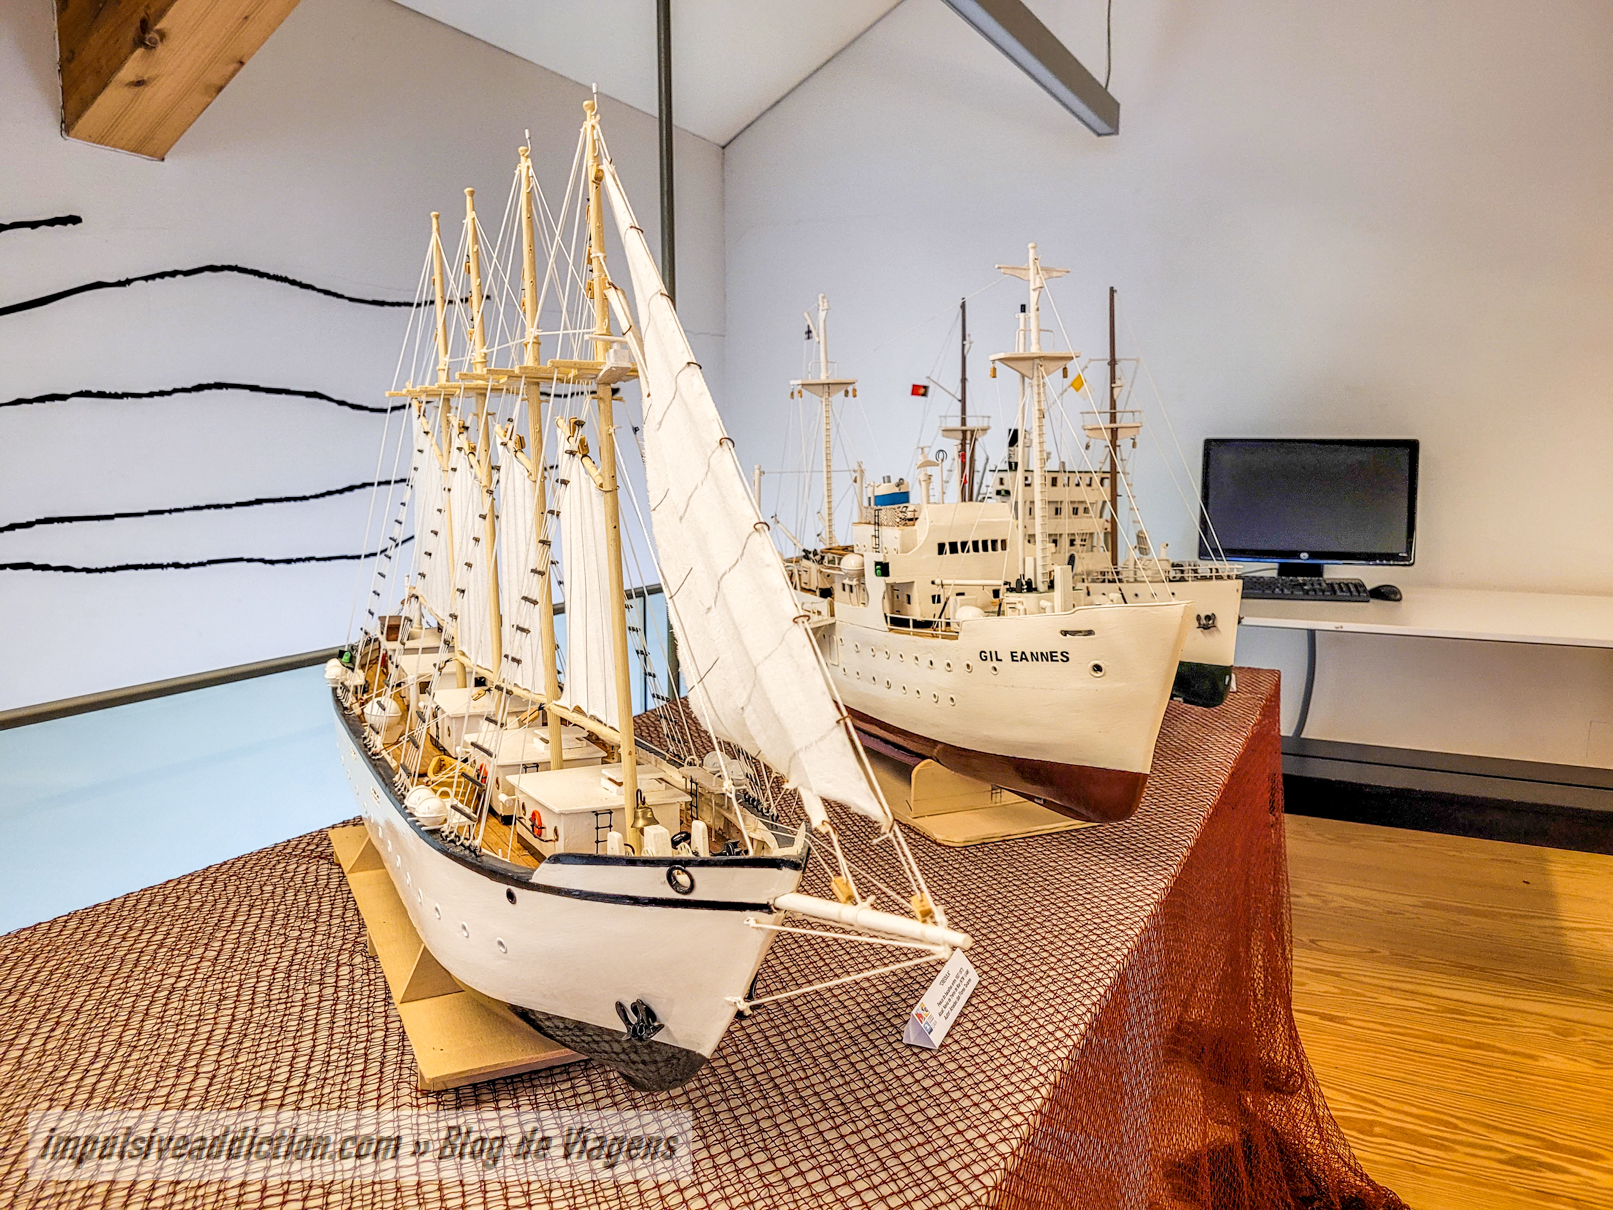 Miniature Ships and Boats at the Afurada Interpretive Center